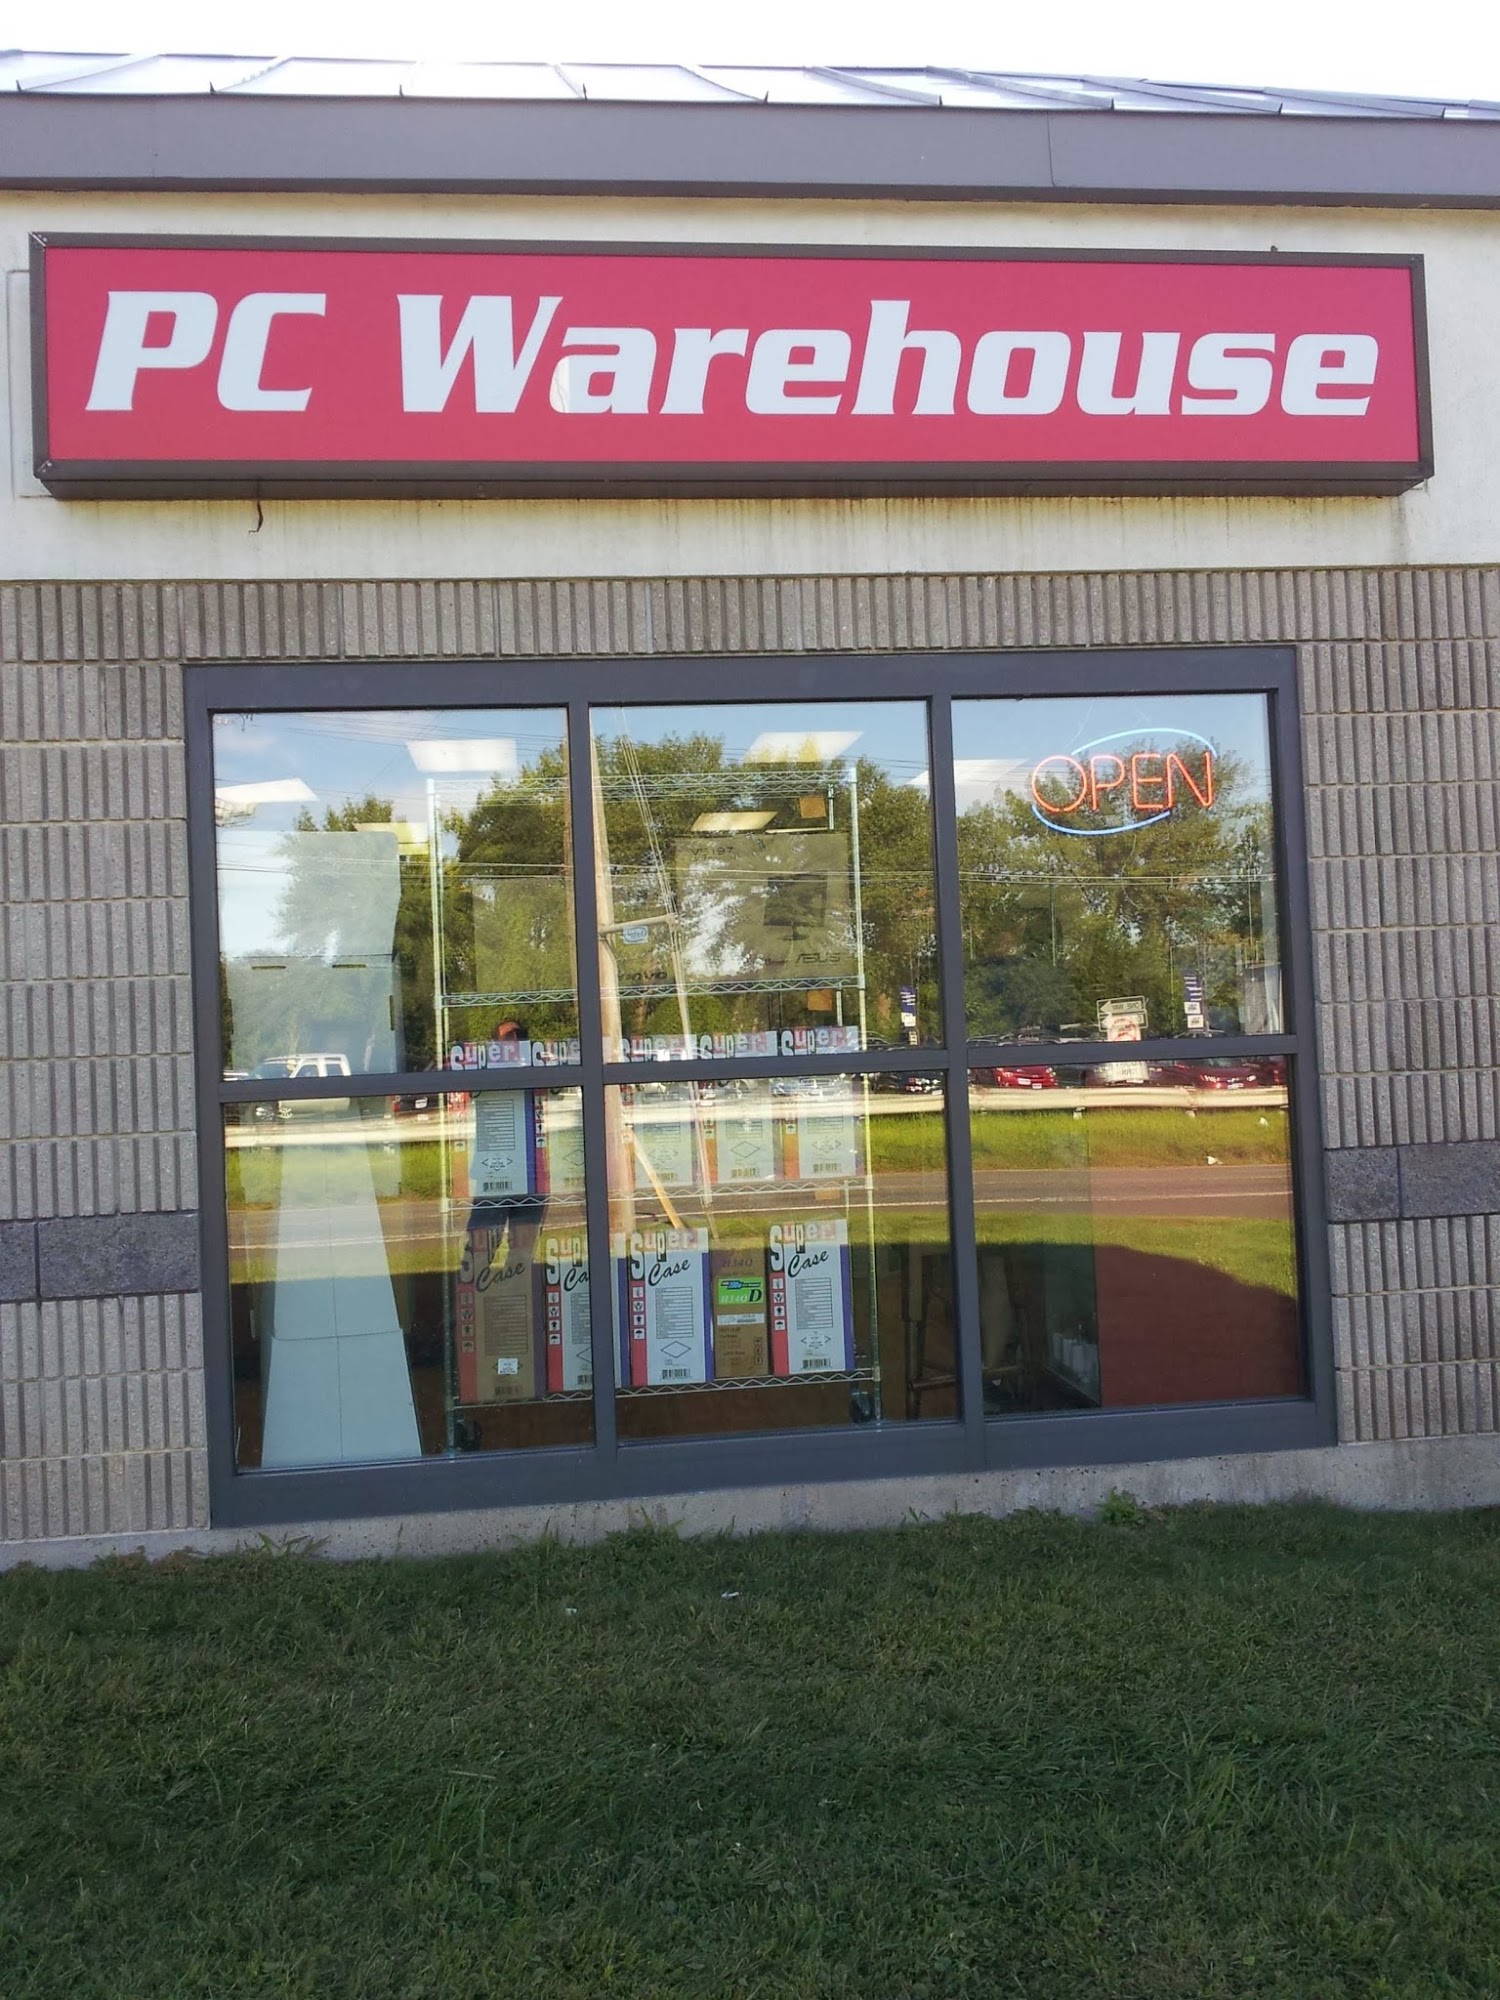 PC Warehouse